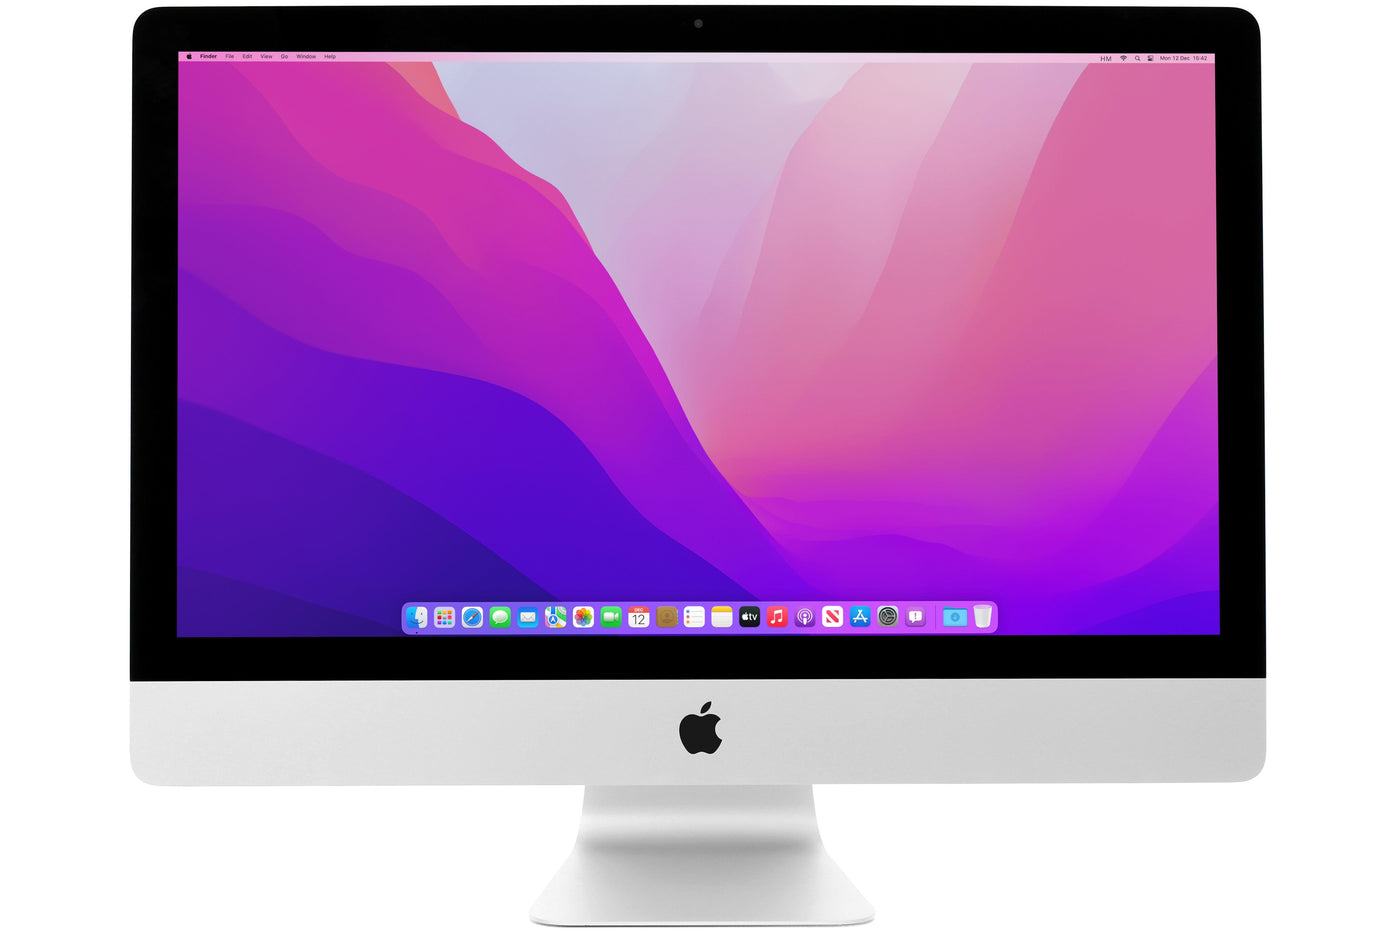 Refurbished Apple iMac 5K Retina 27-inch 2017– Hoxton Macs